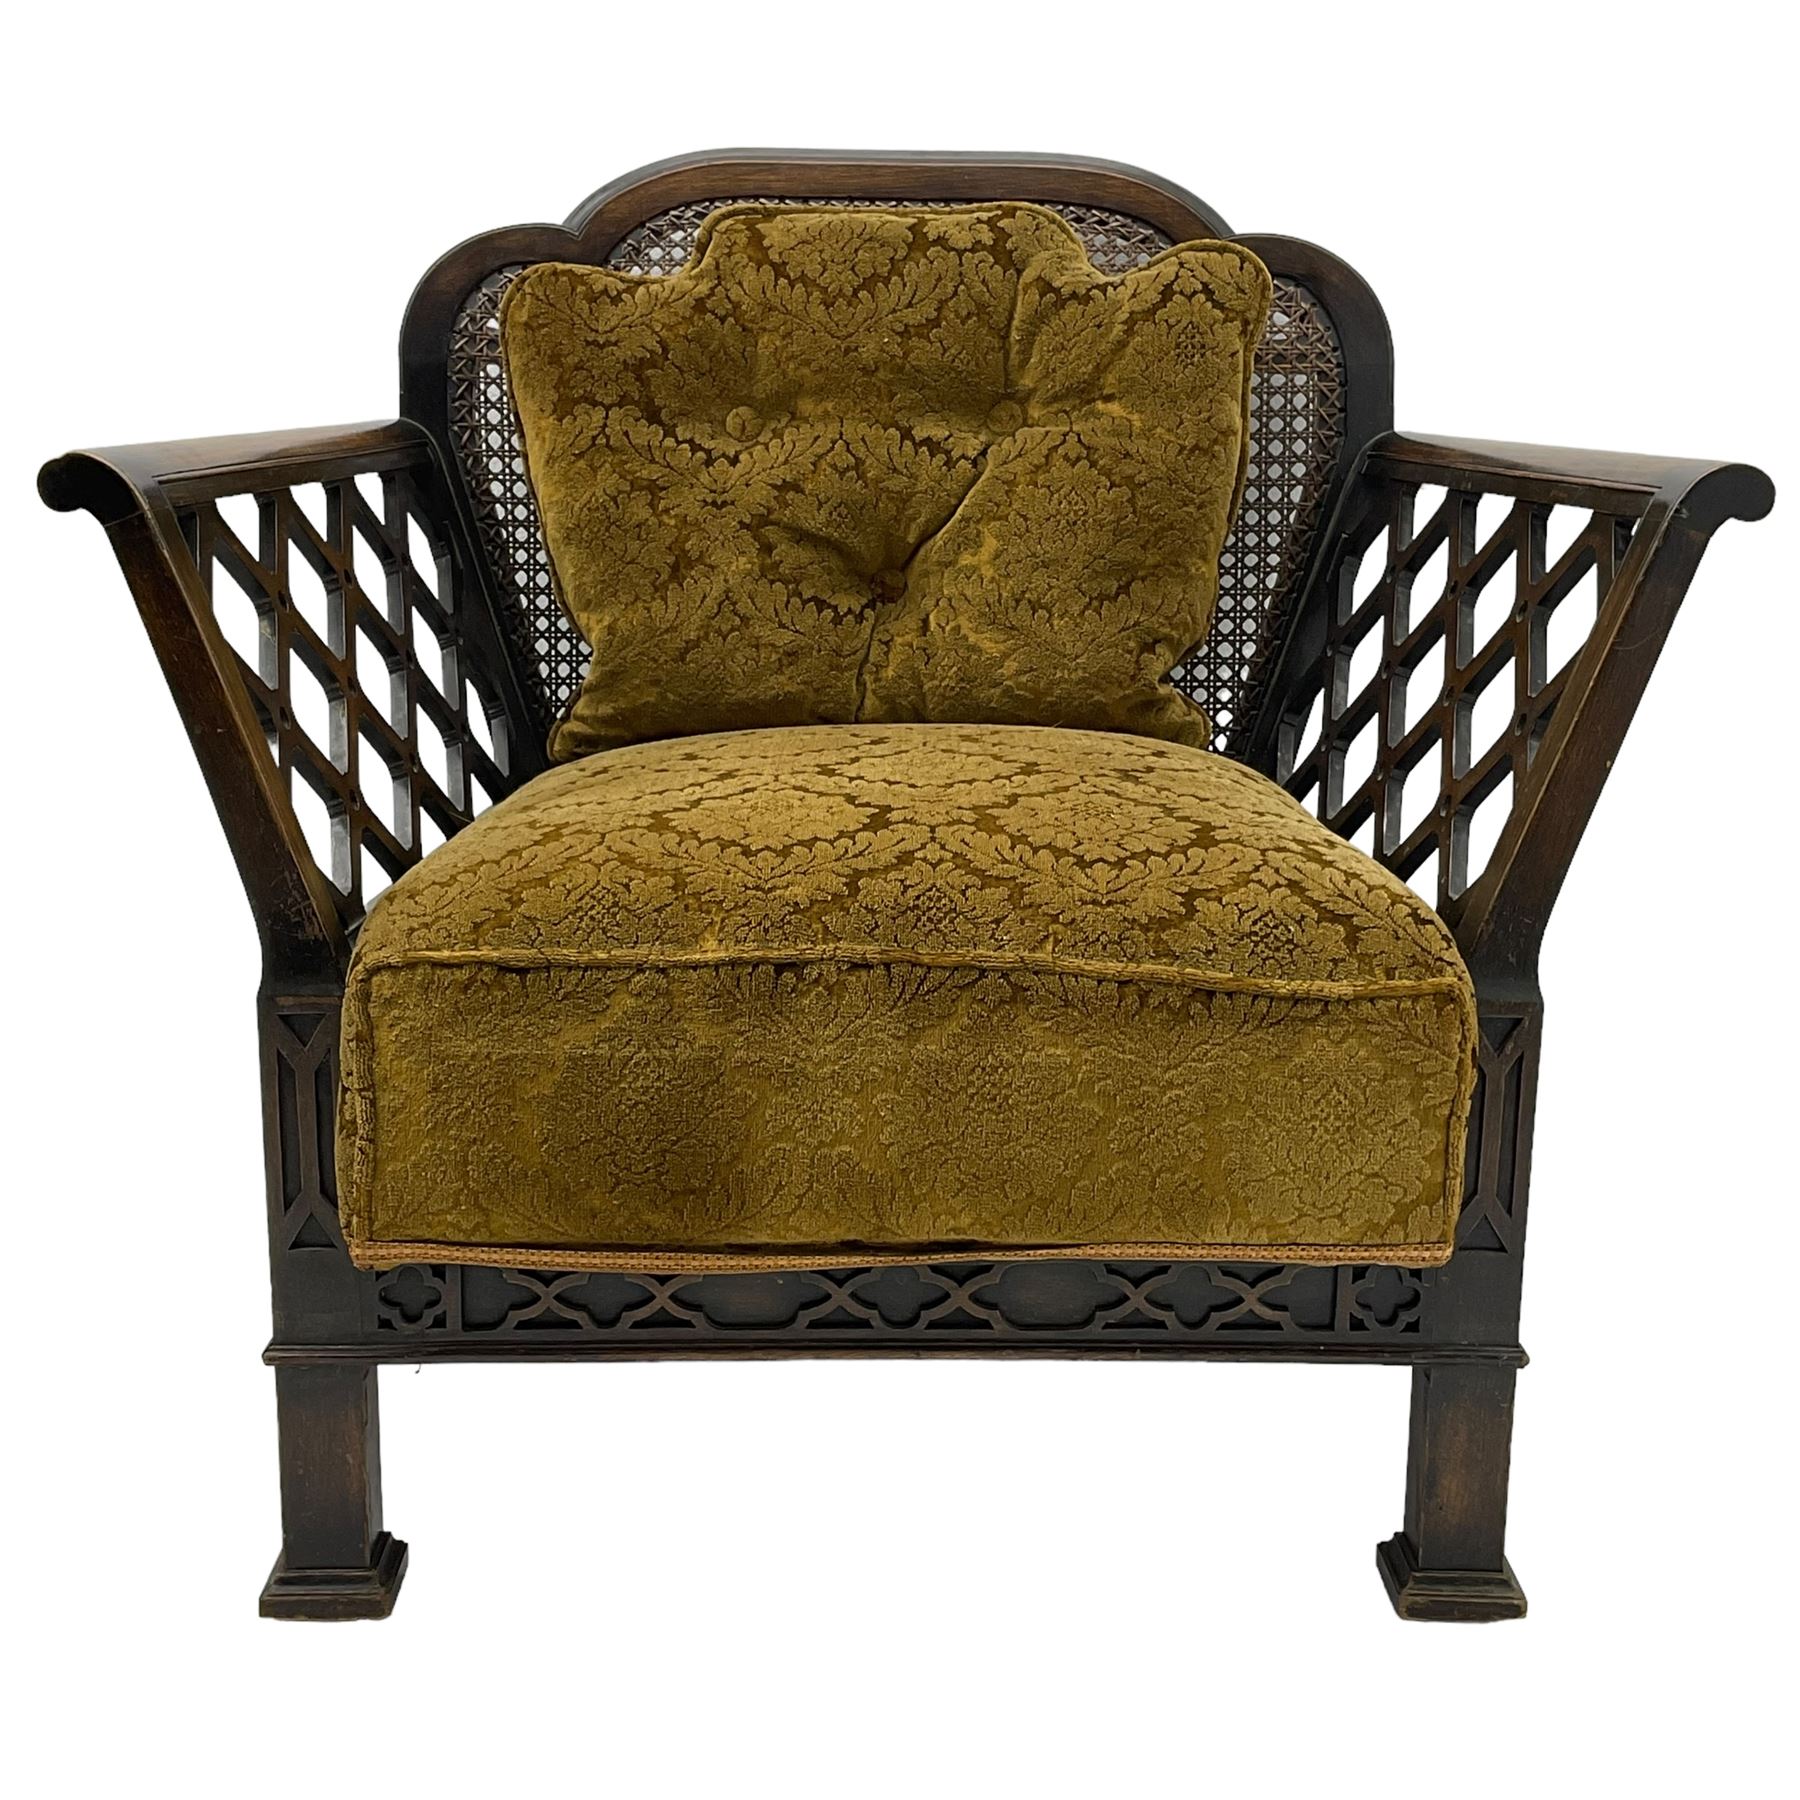 Early 20th century three-piece bergère suite - three seat sofa (W177cm - Image 10 of 21